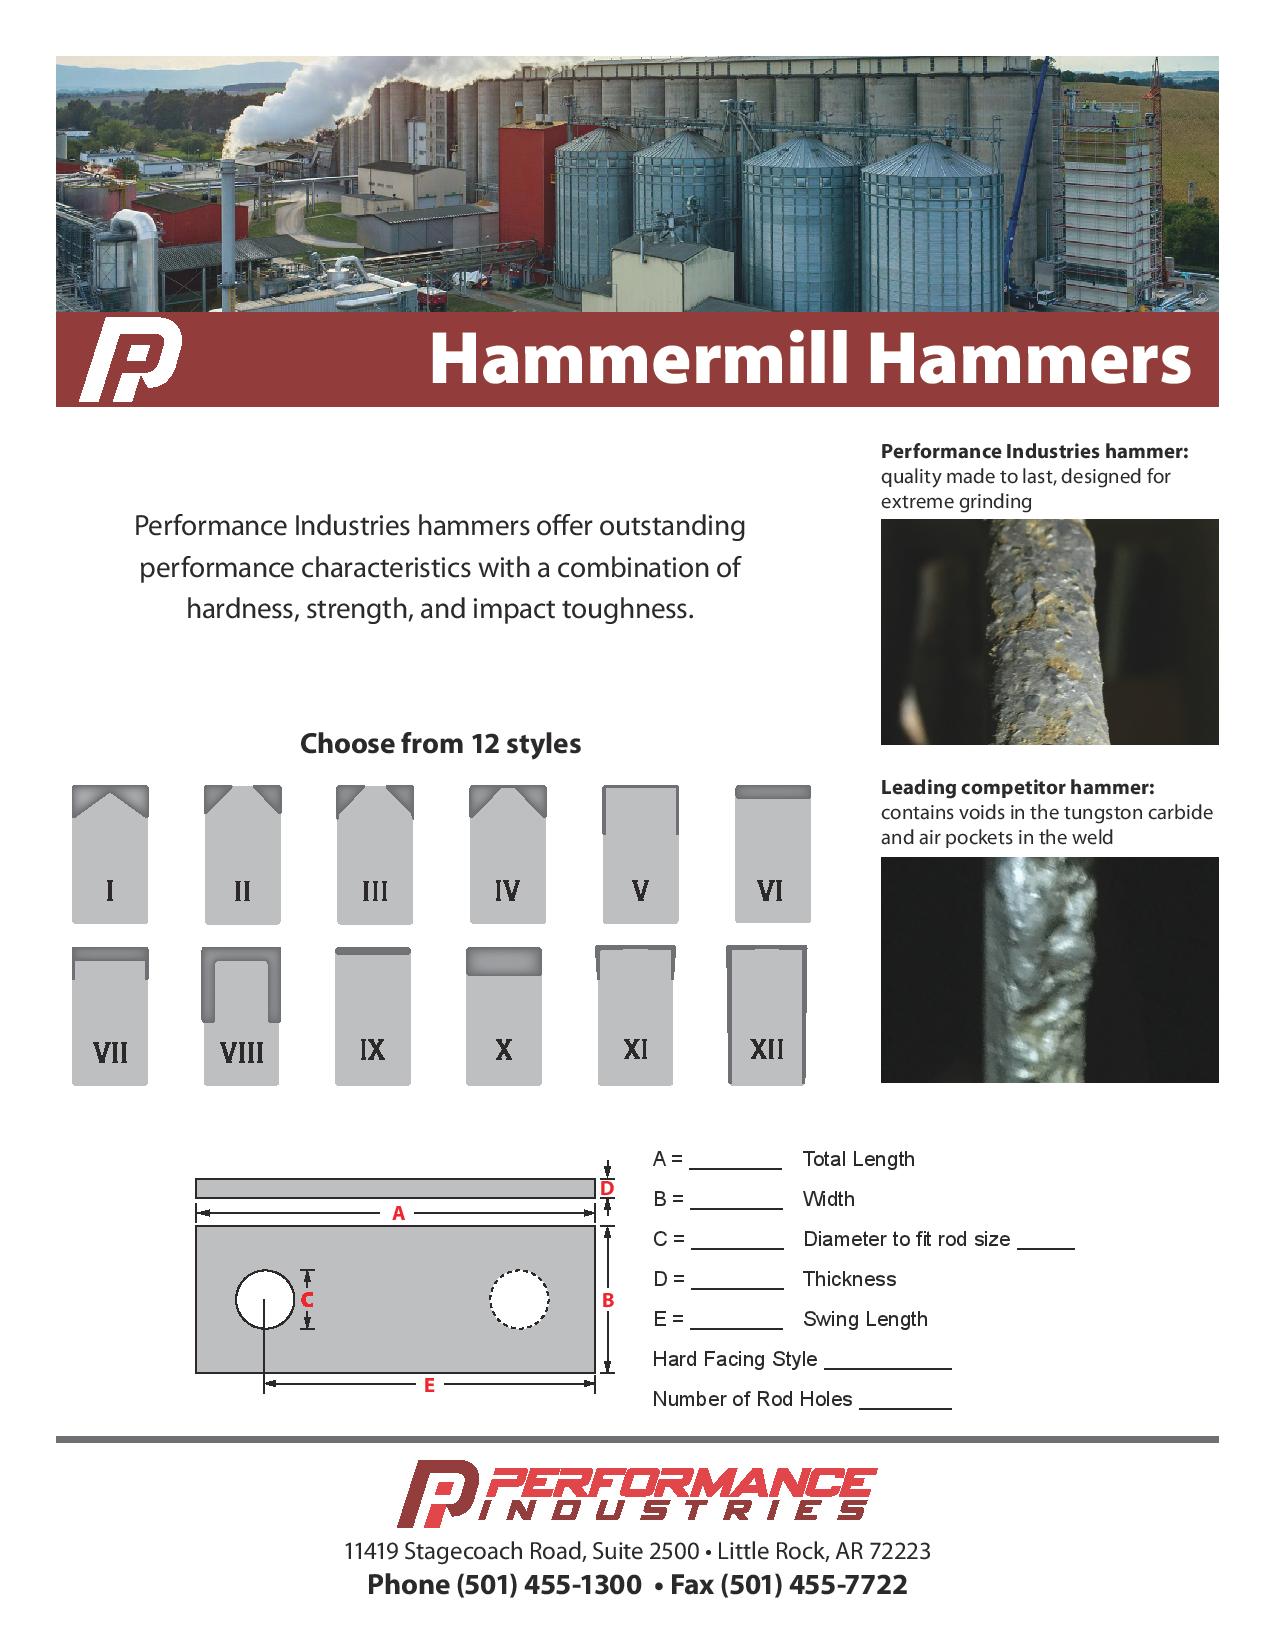 Hammer Hardfacing Styles